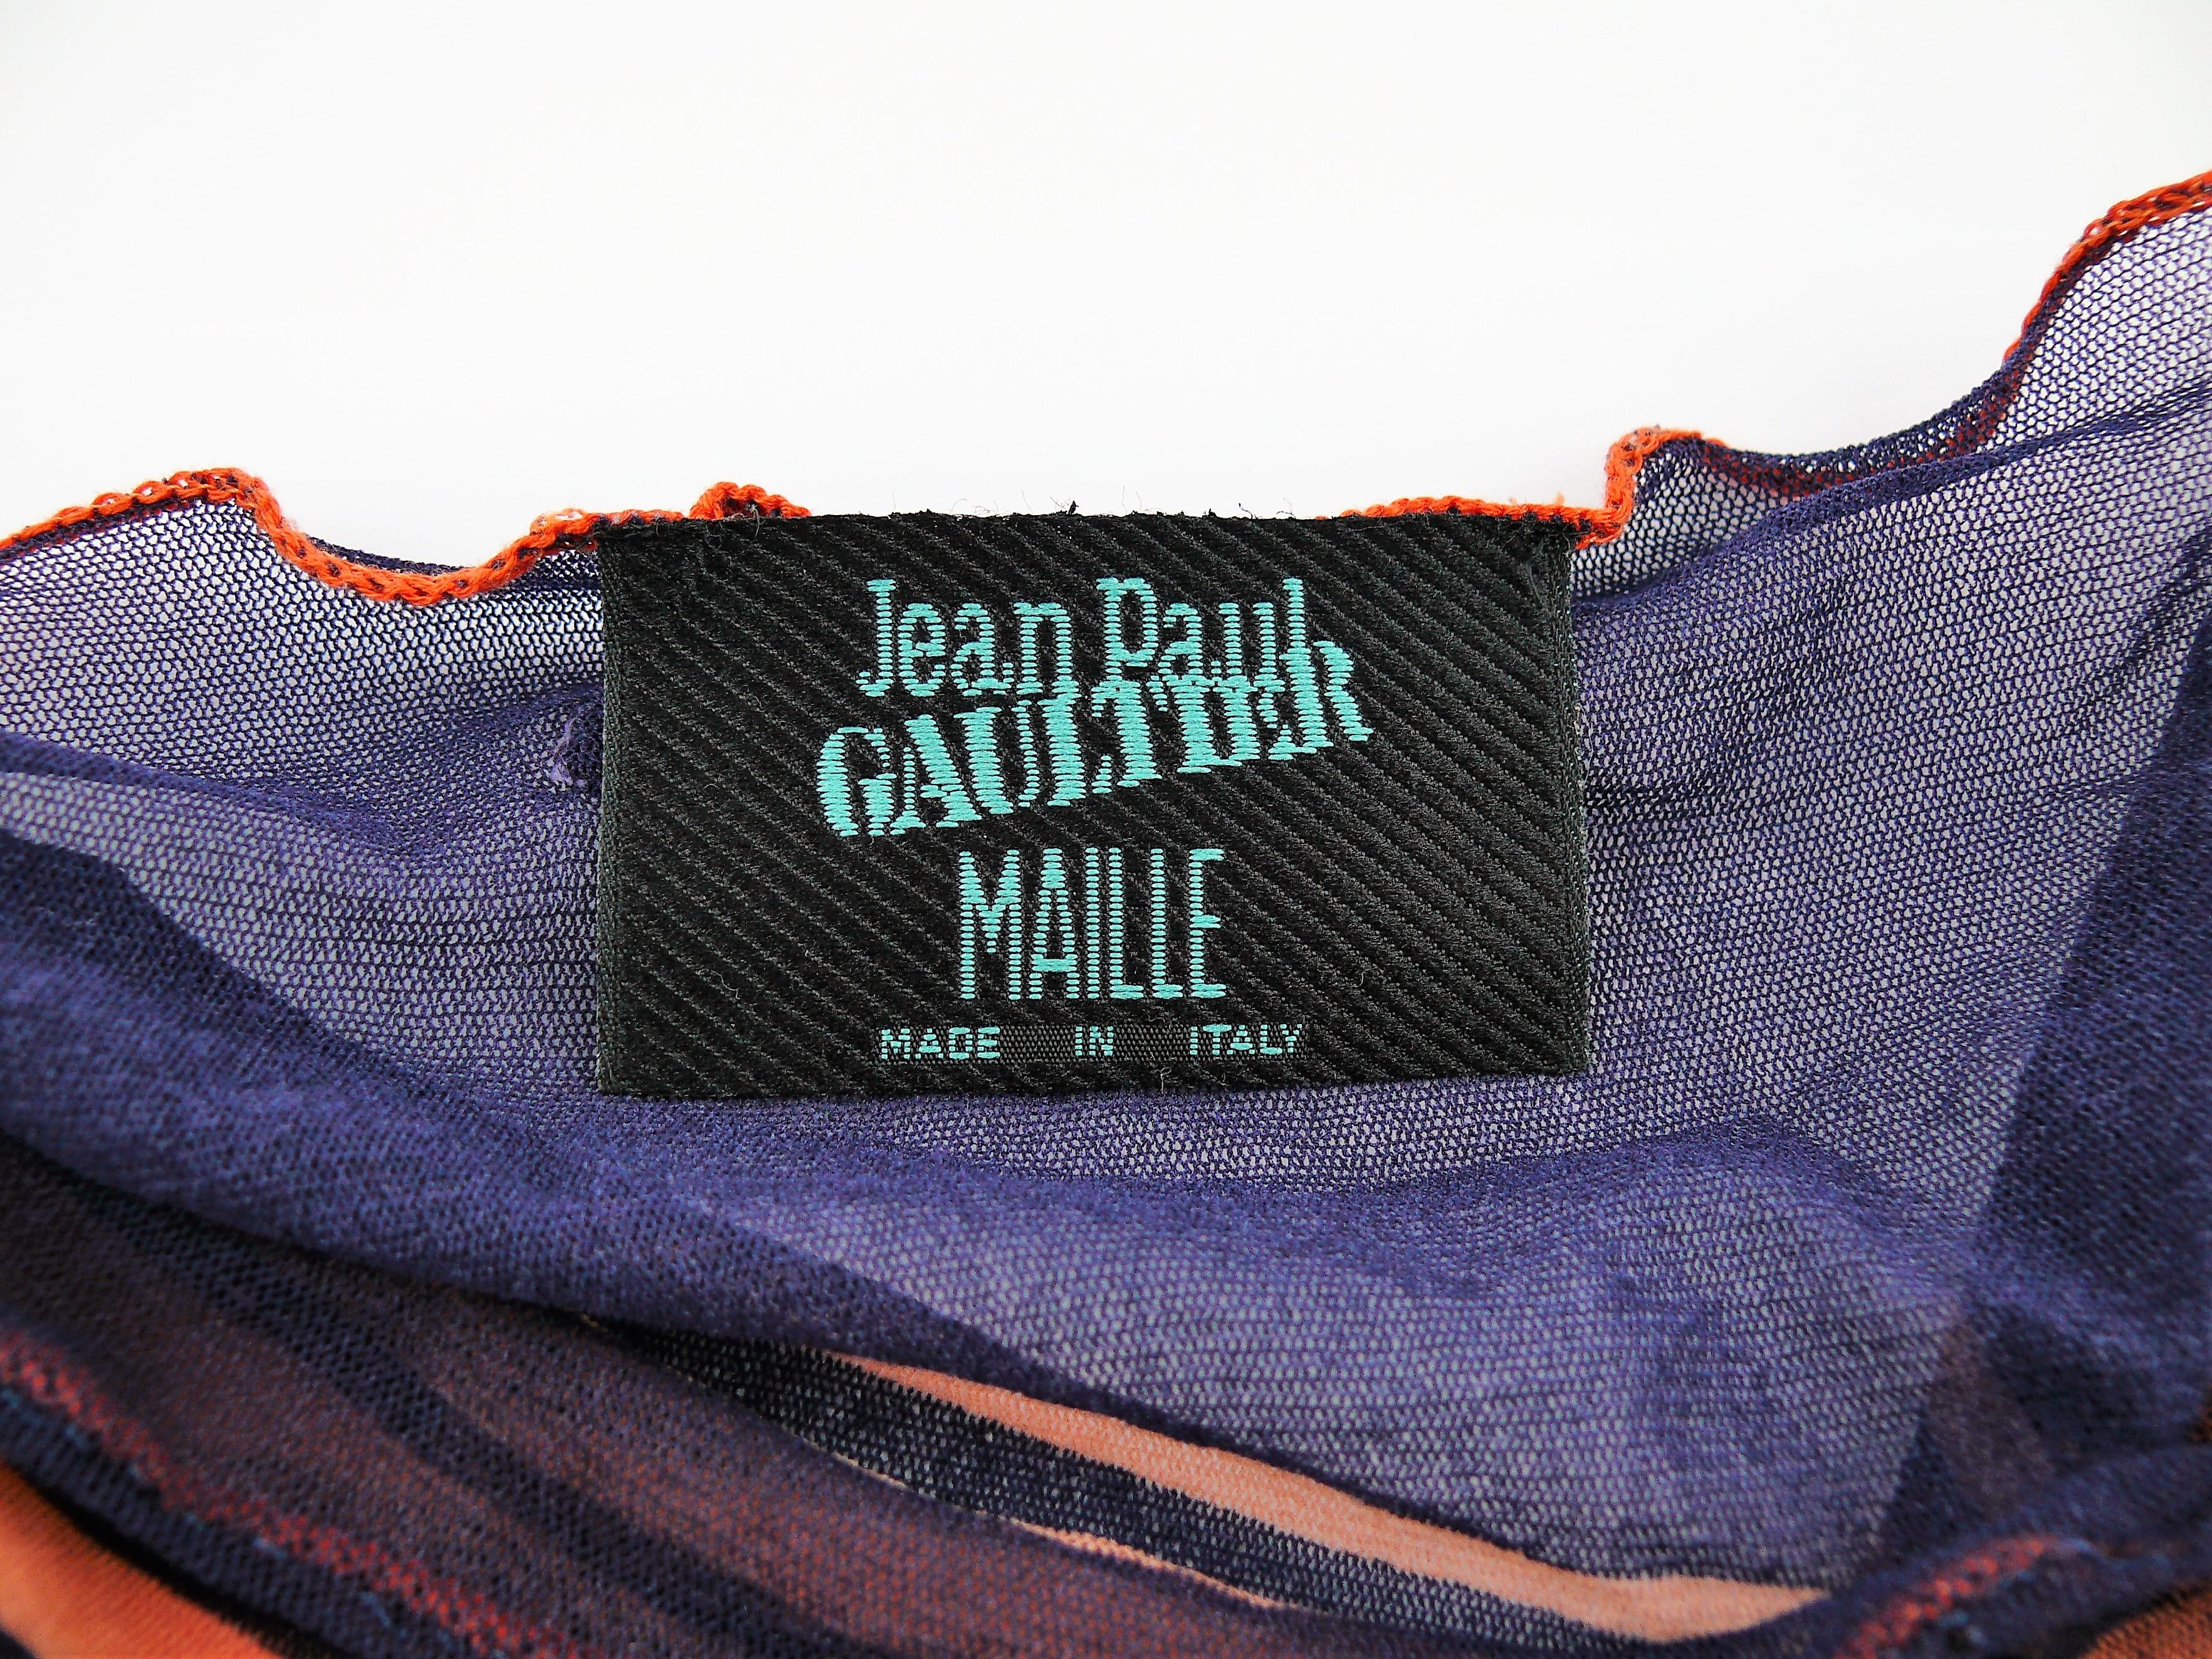 Jean Paul Gaultier Vintage Iconic Body Contour Maxi Caftan S/S 1996 Collection 7